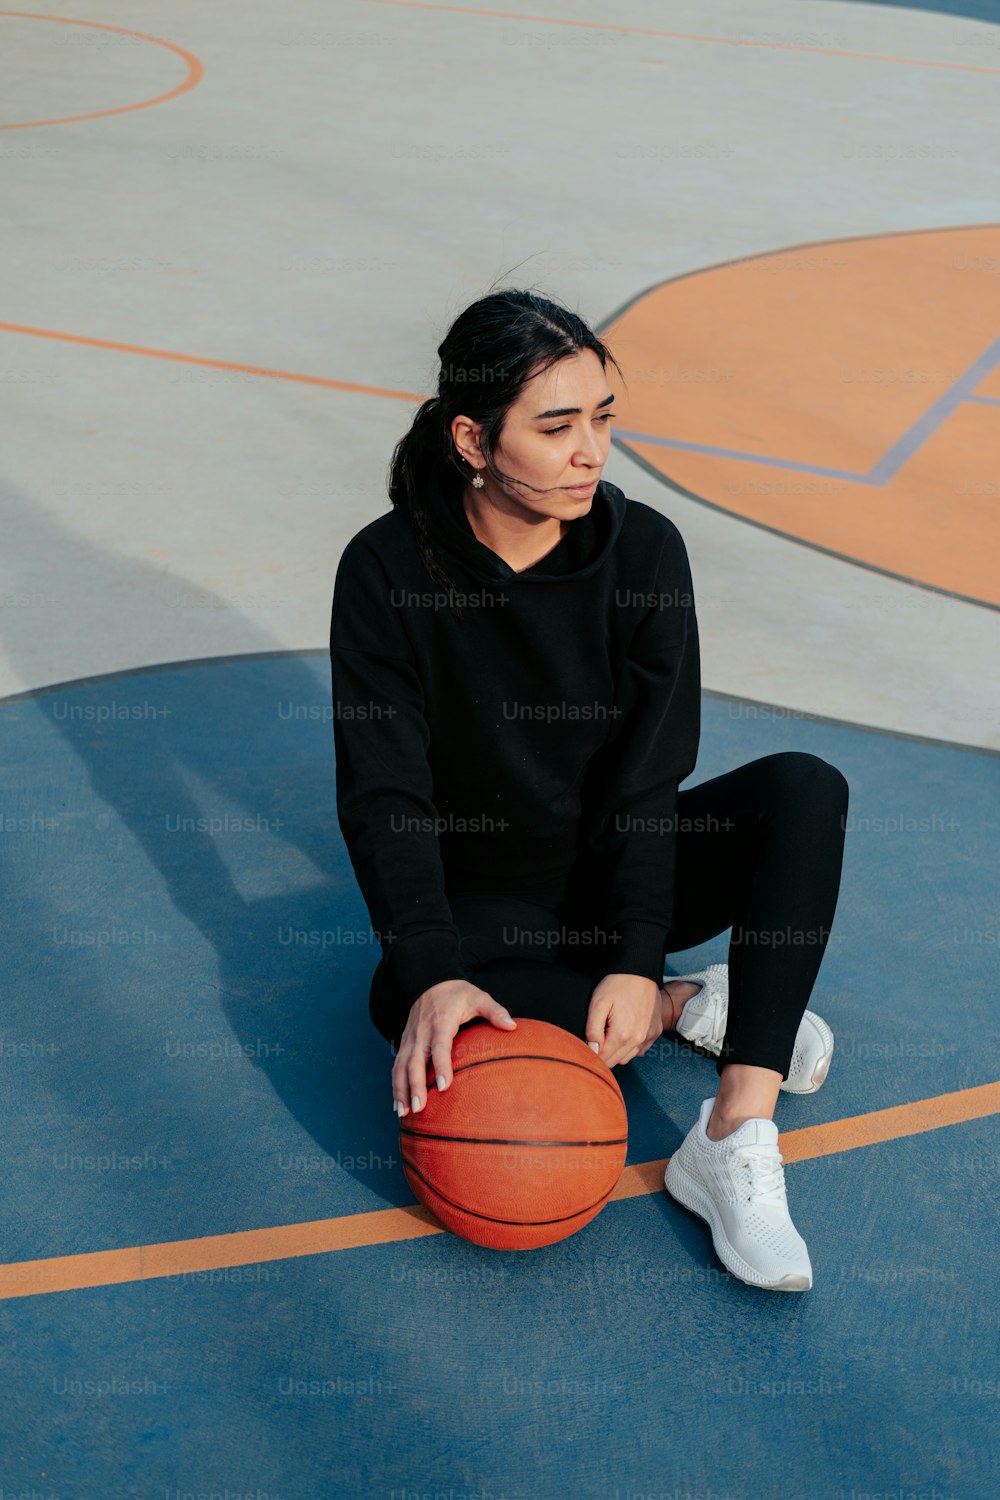 Une femme assise sur un terrain de basket-ball tenant un ballon de basket-ball